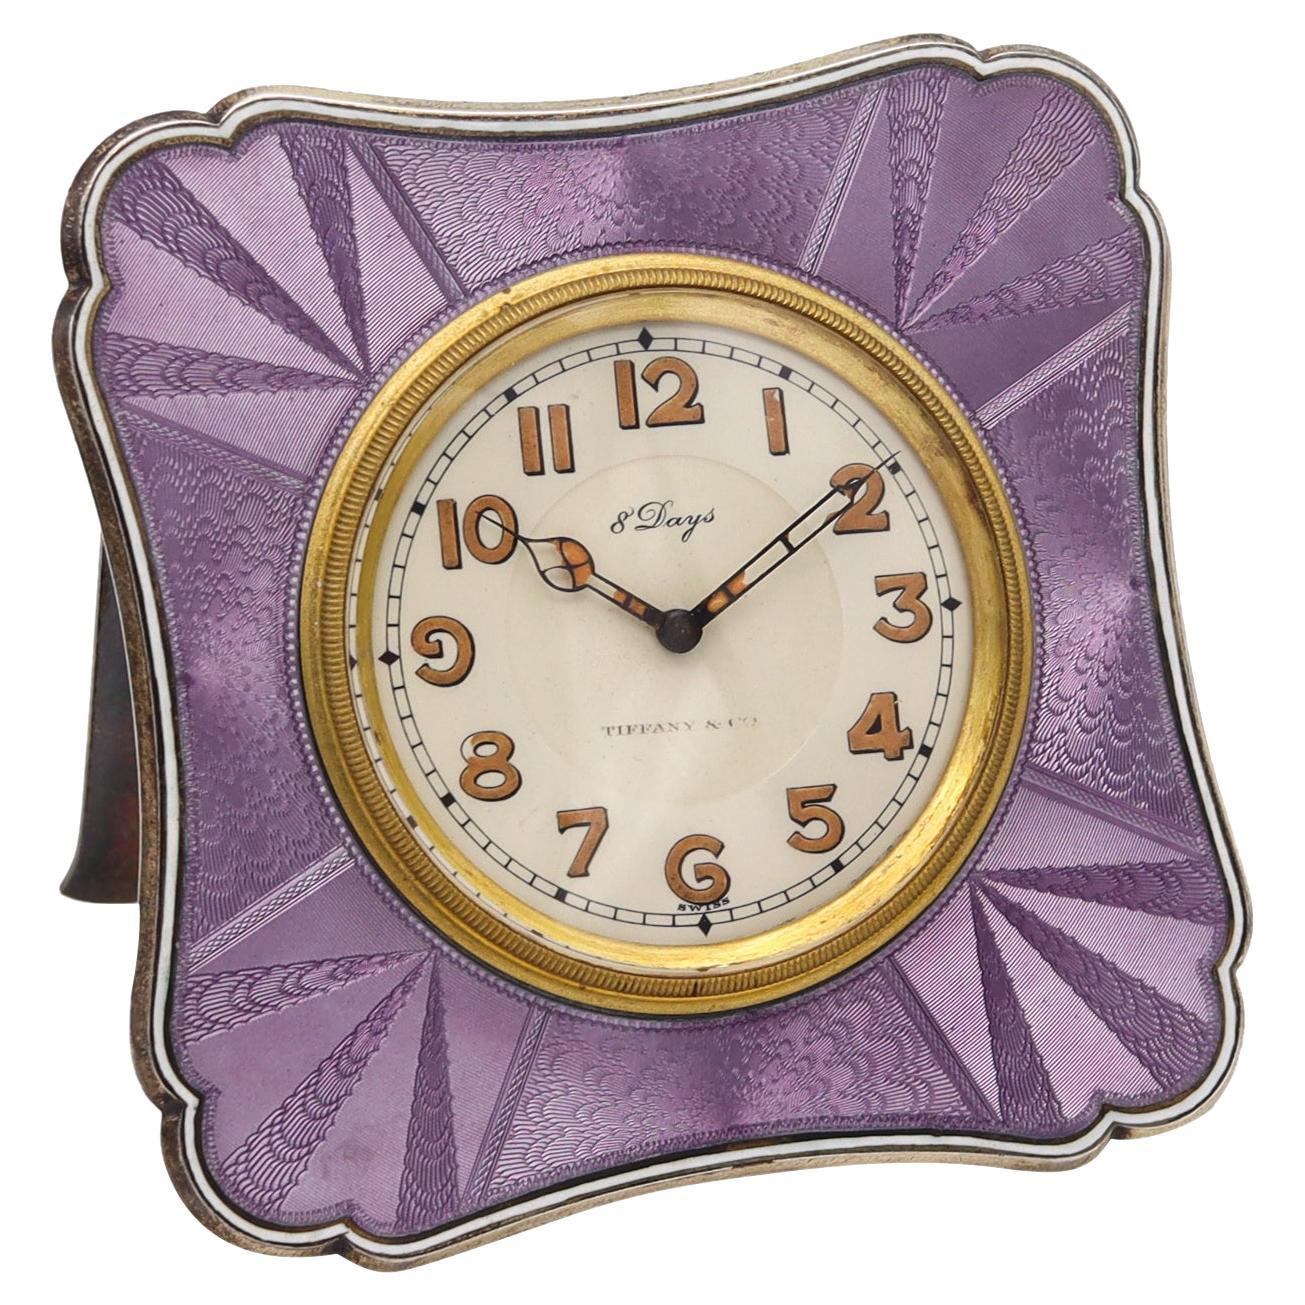 Tiffany & Co. 1920 Art Deco 8 Days Desk Clock Sterling Silver & Enamel with Box  For Sale